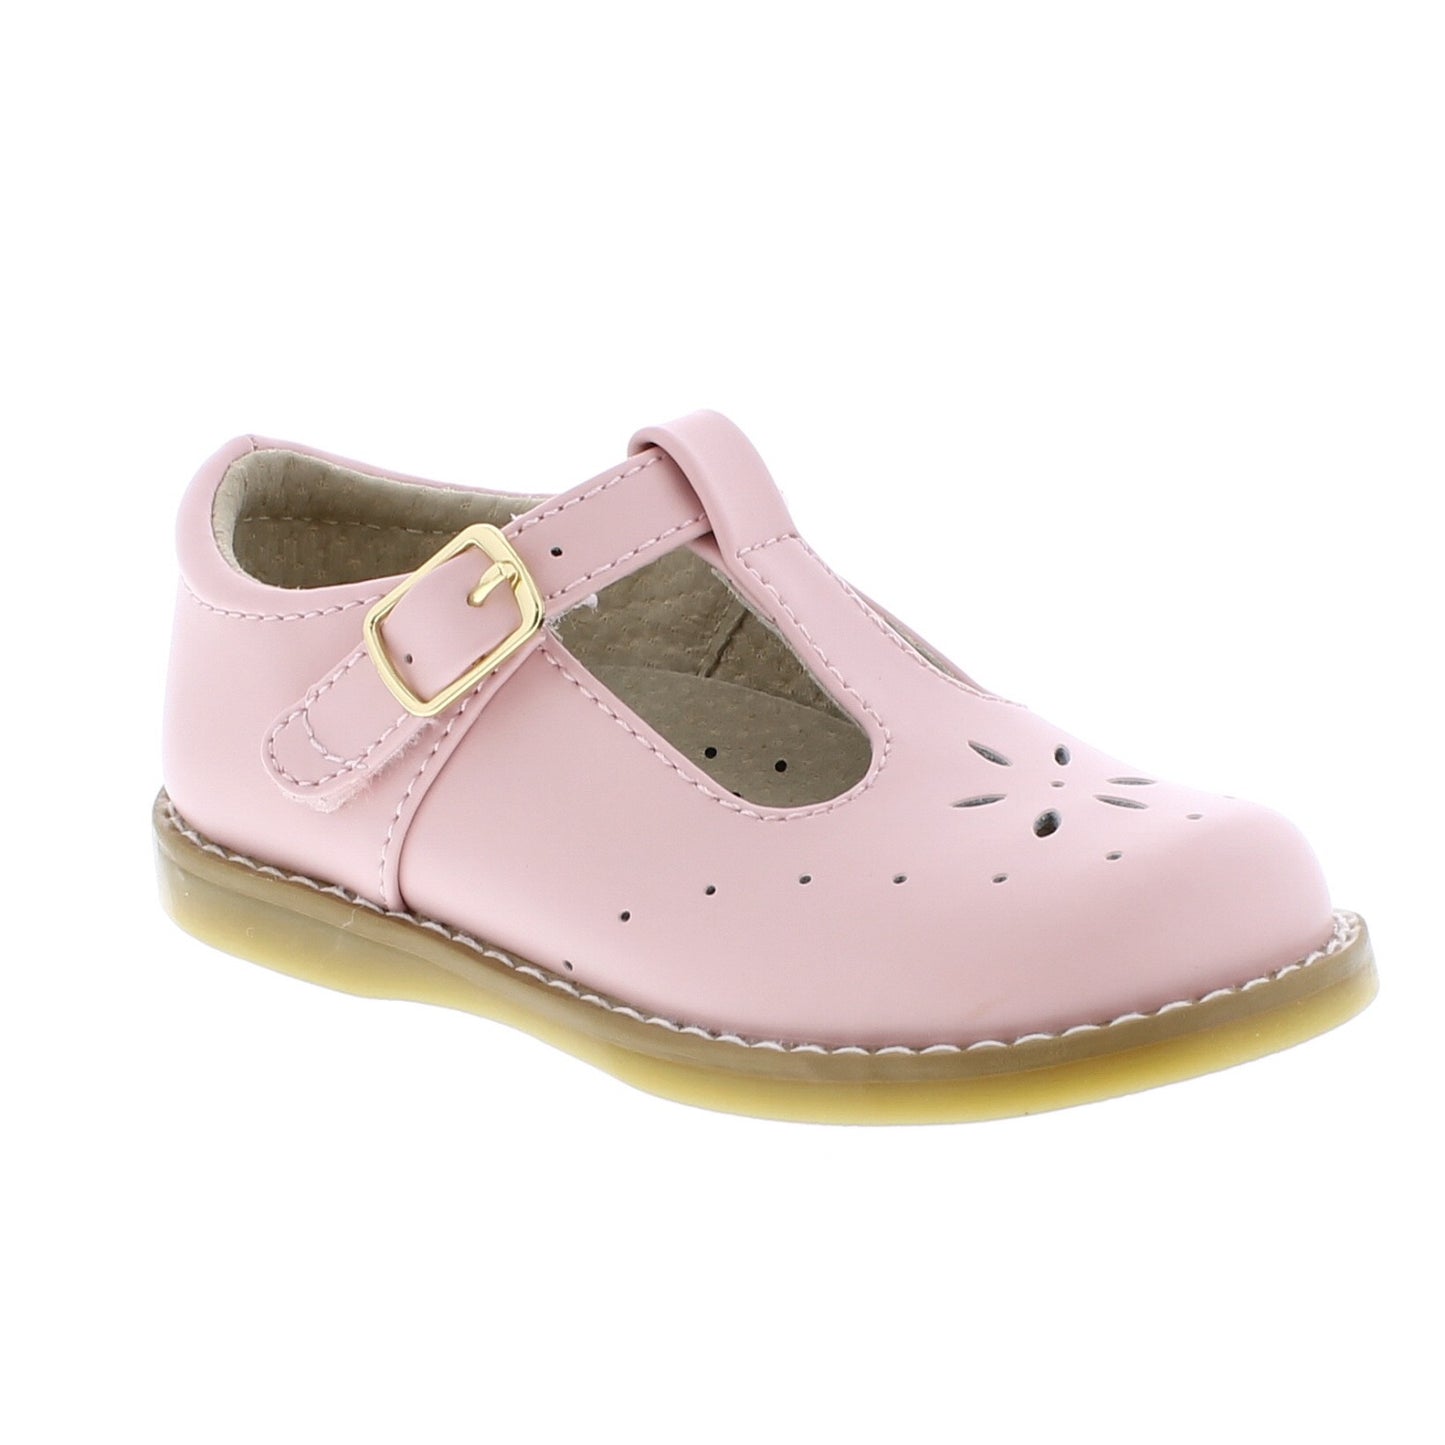 FootMates Light Pink Sherry  Shoe Children's Mary Jane